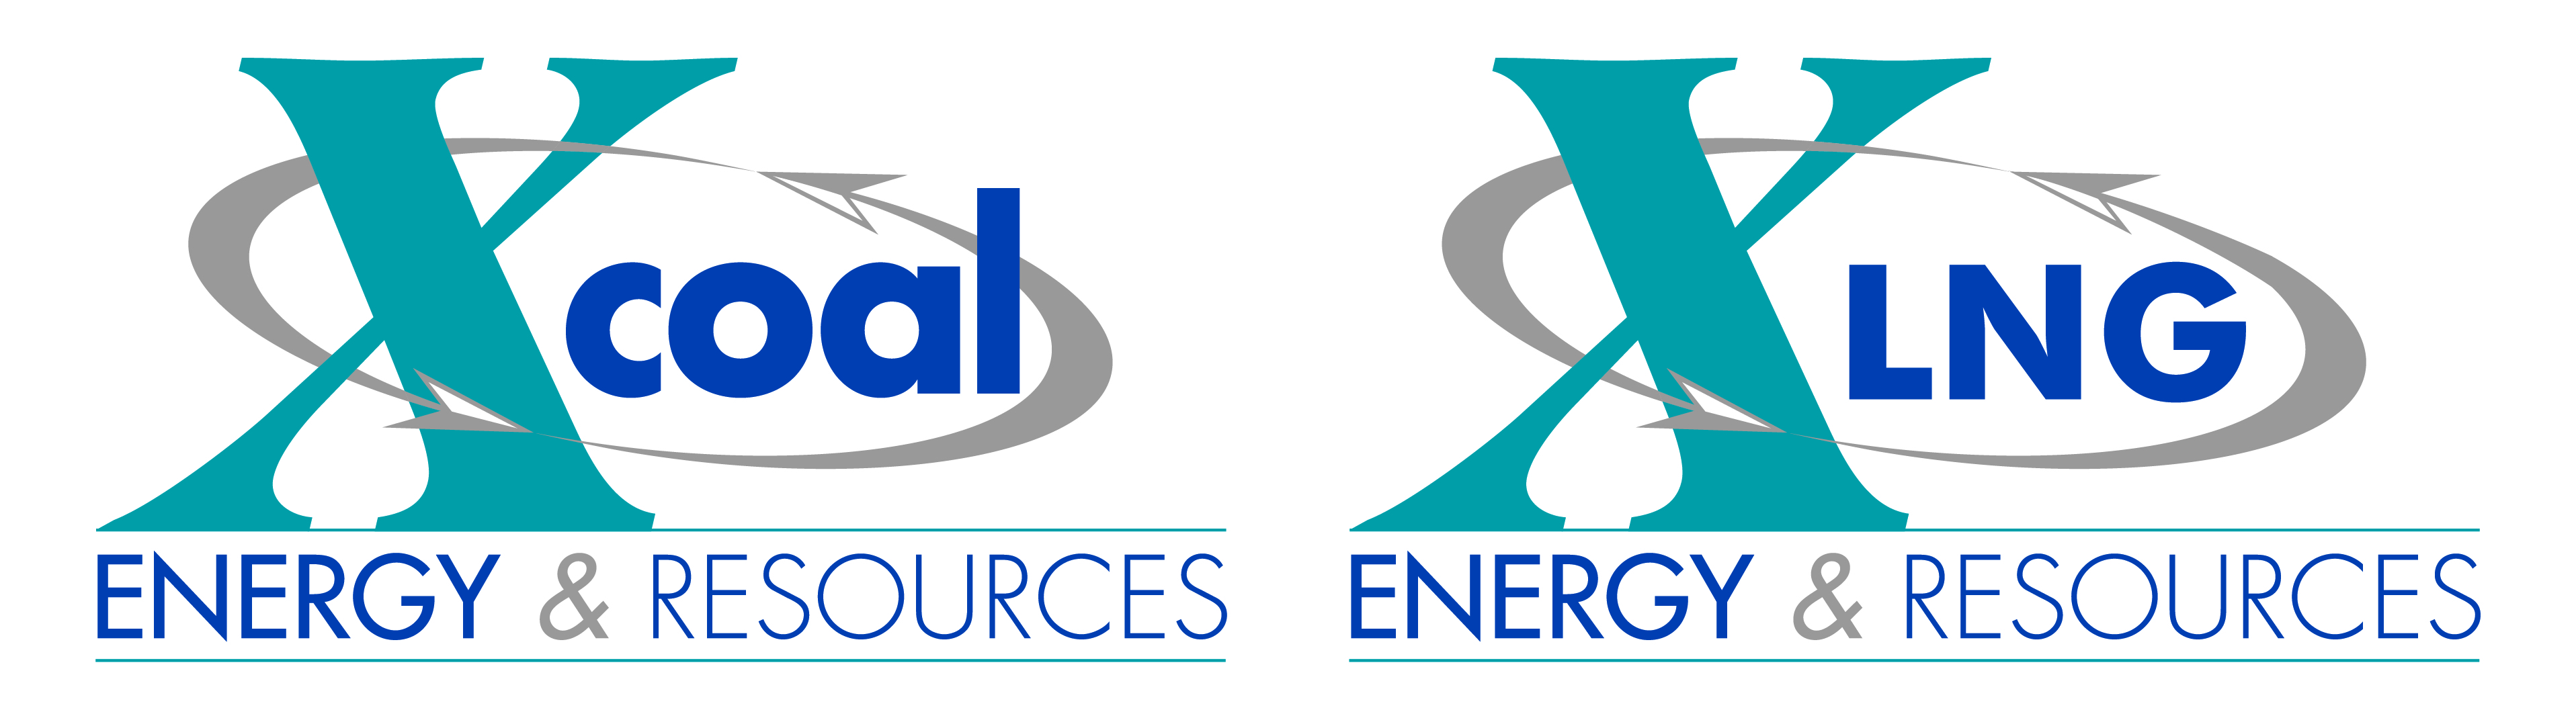 Xcoal Energy & Resources / XLNG Energy & Resources 